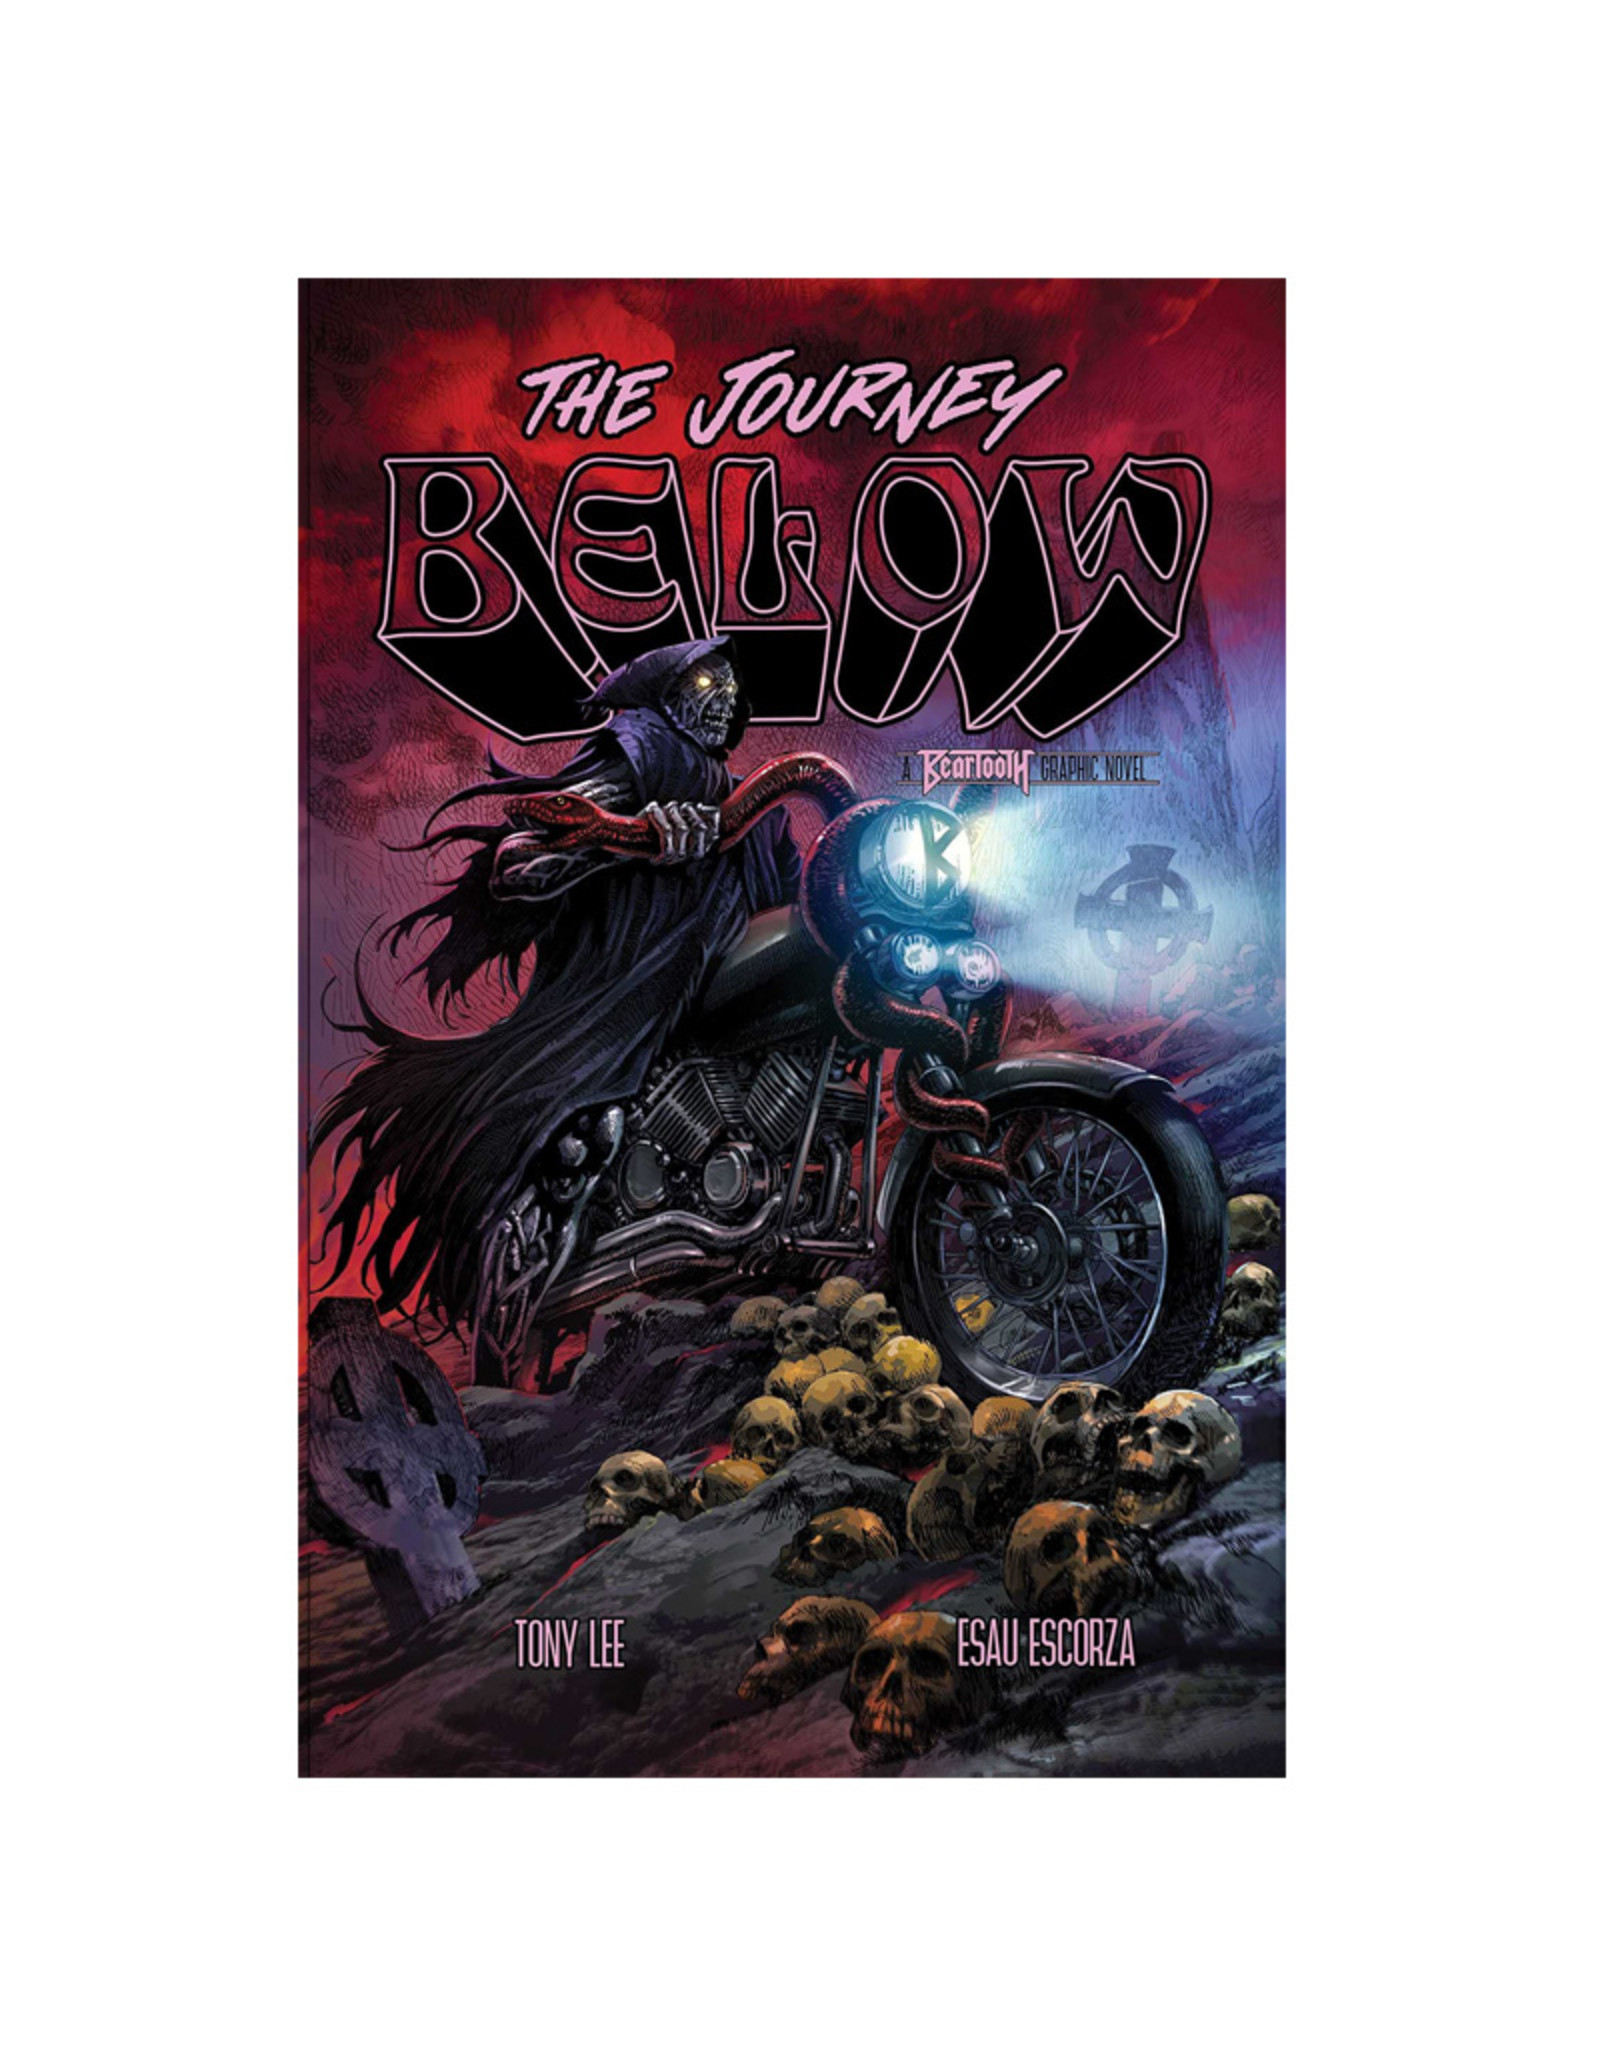 Z2 Comics Beartooth: The Journey Below